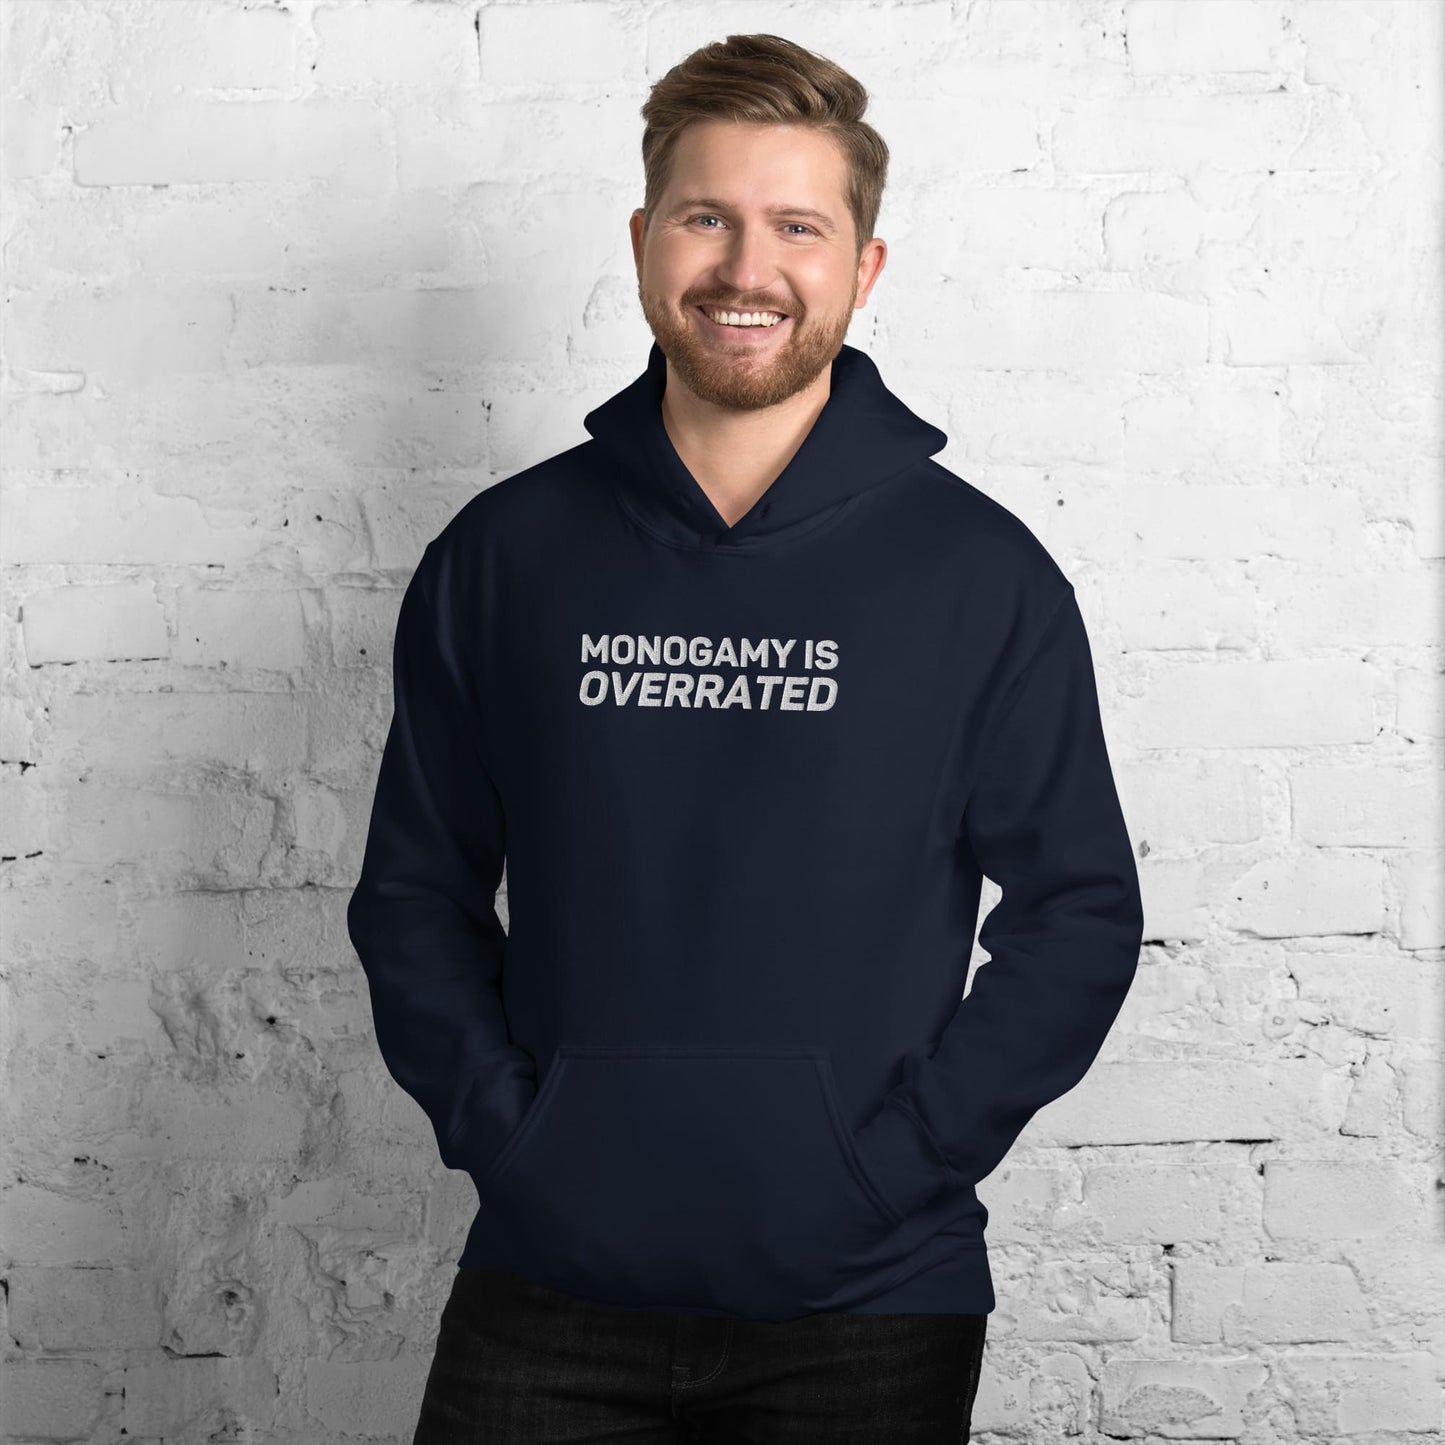 polyamory hoodie, statement polyamorous pride embroidered hooded sweatshirt, model 1